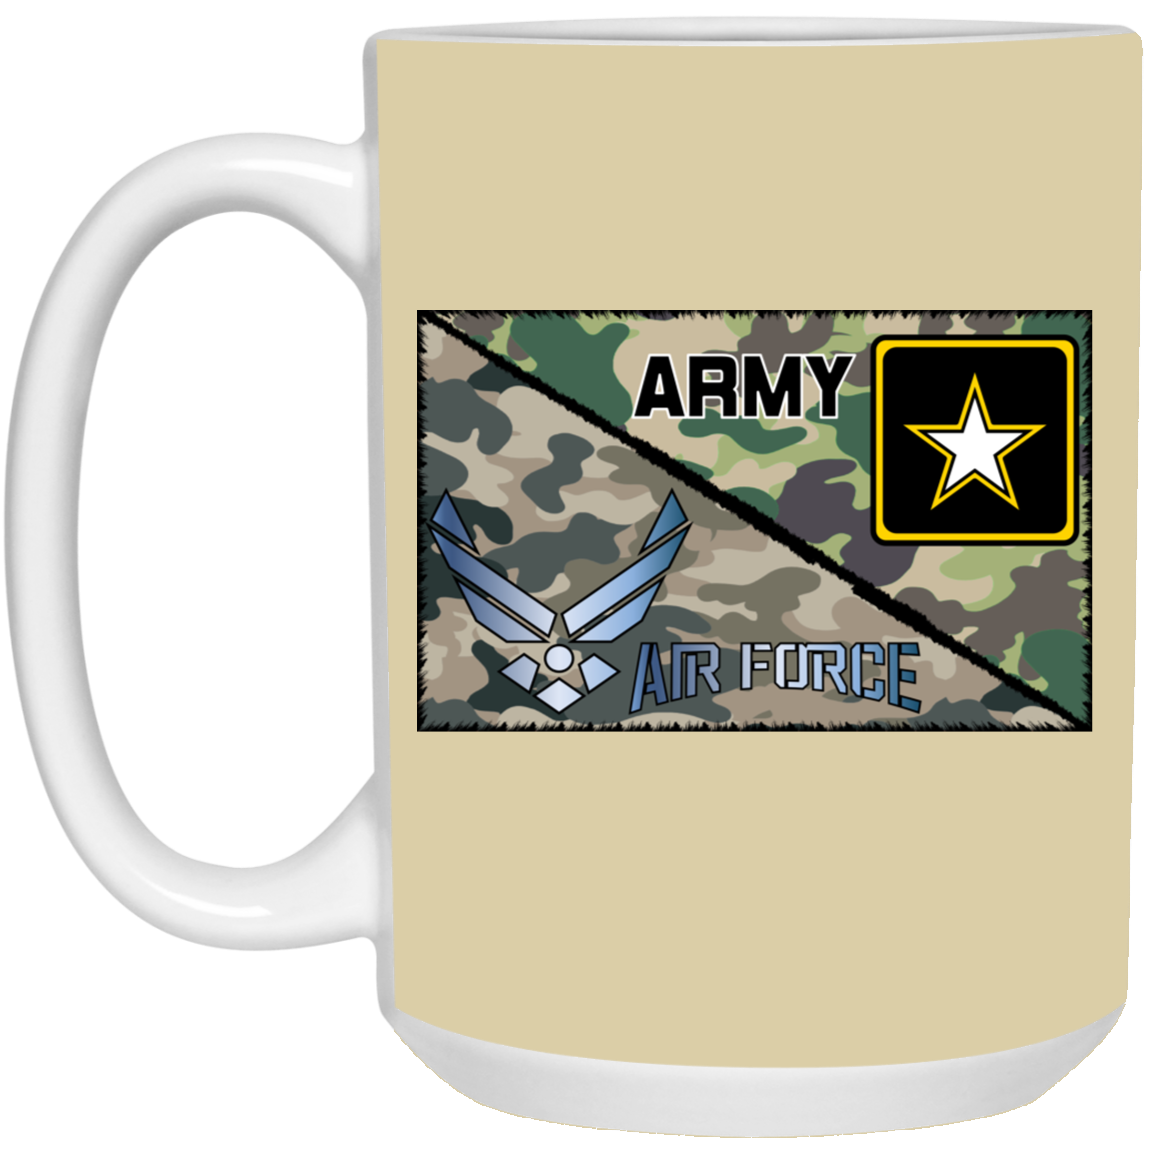 Army Air Force 15 oz. White Mug